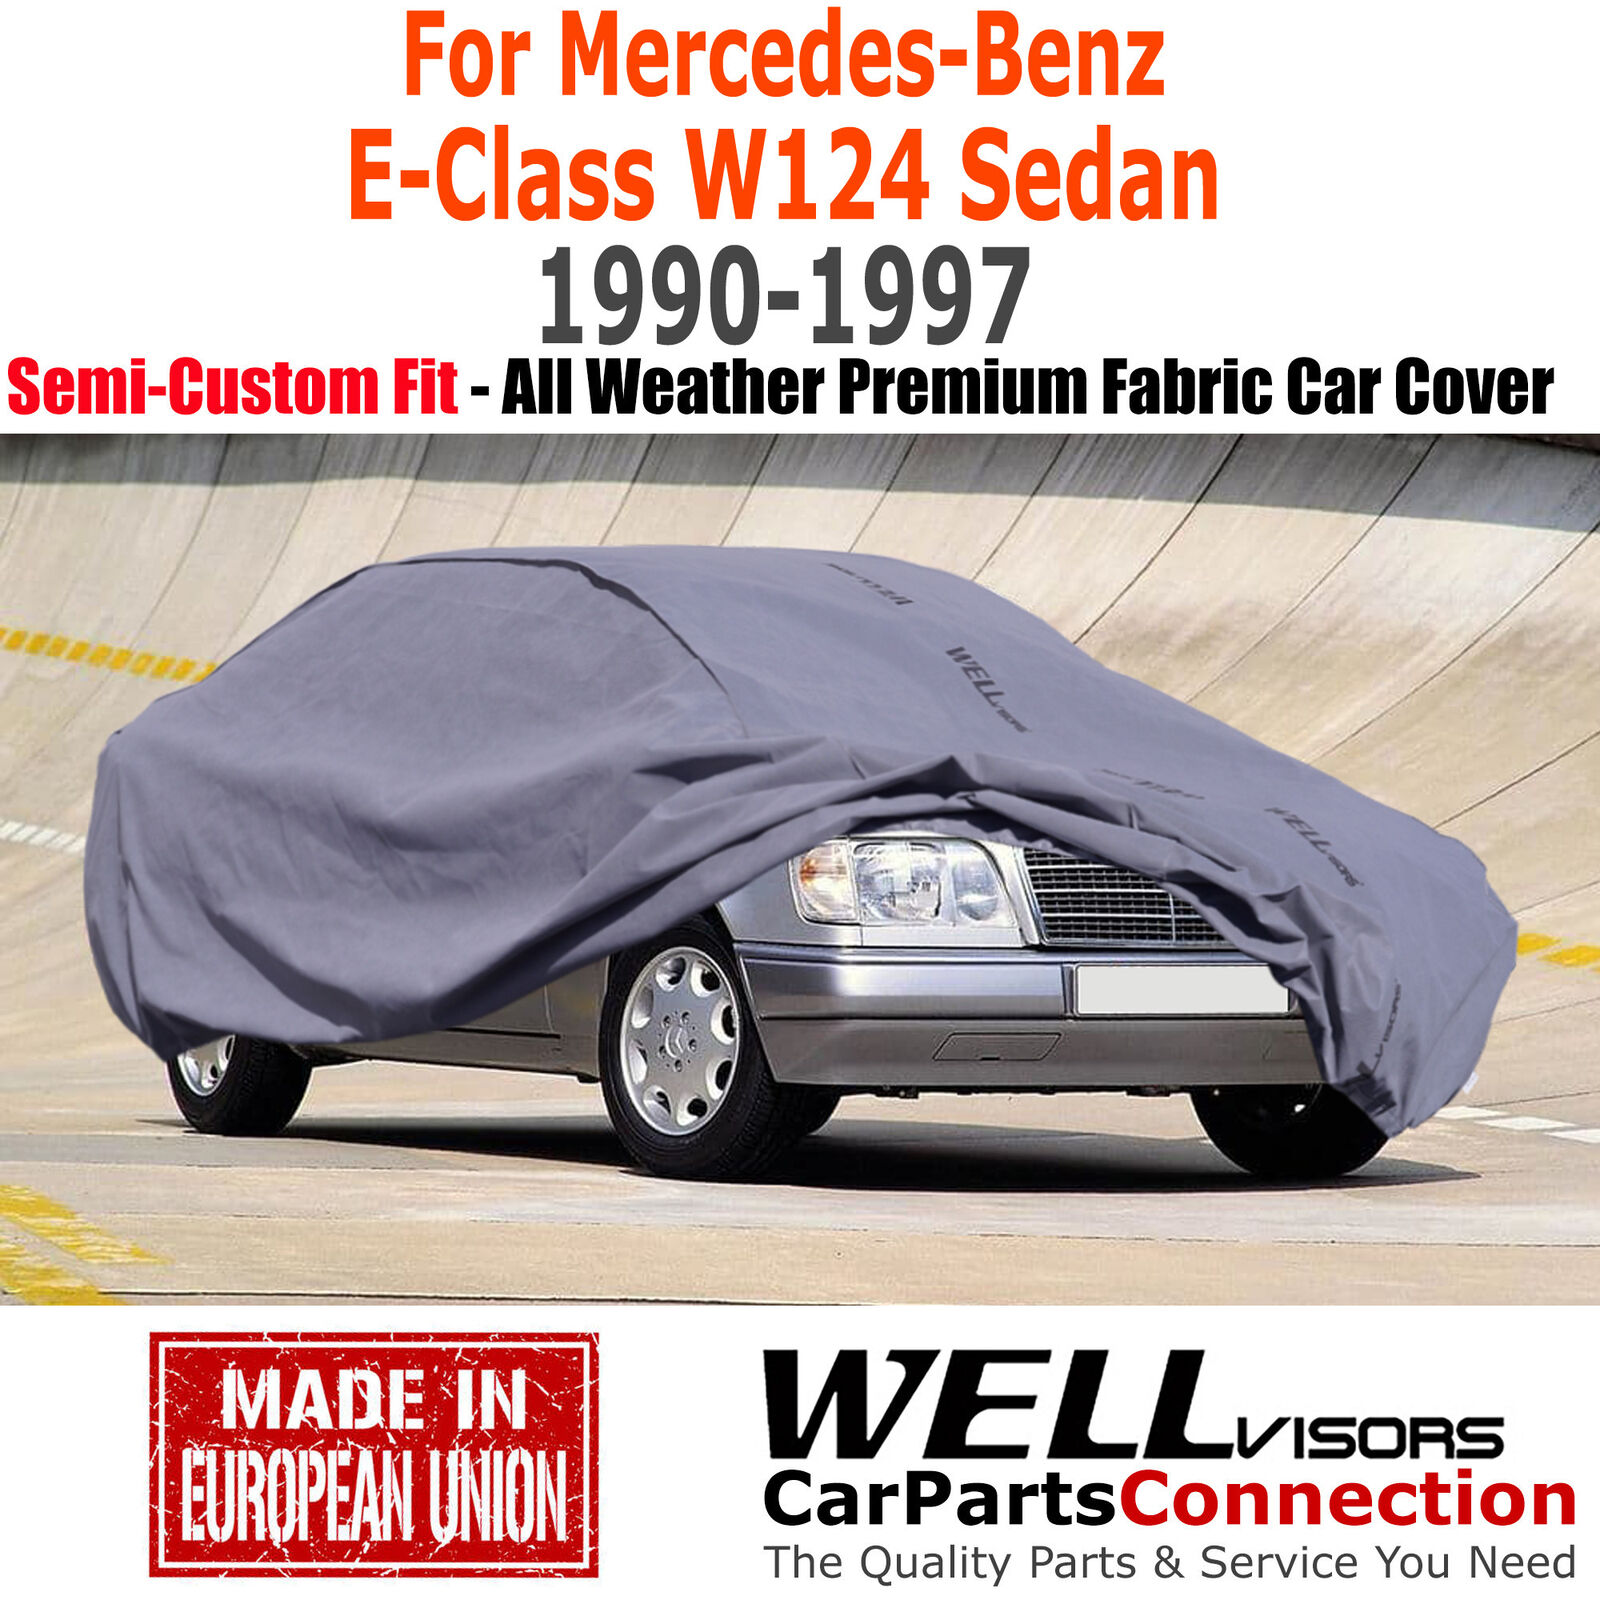 WellVisors All Weather Car Cover For 1990-1997 Mercedes E-Class W124 Sedan